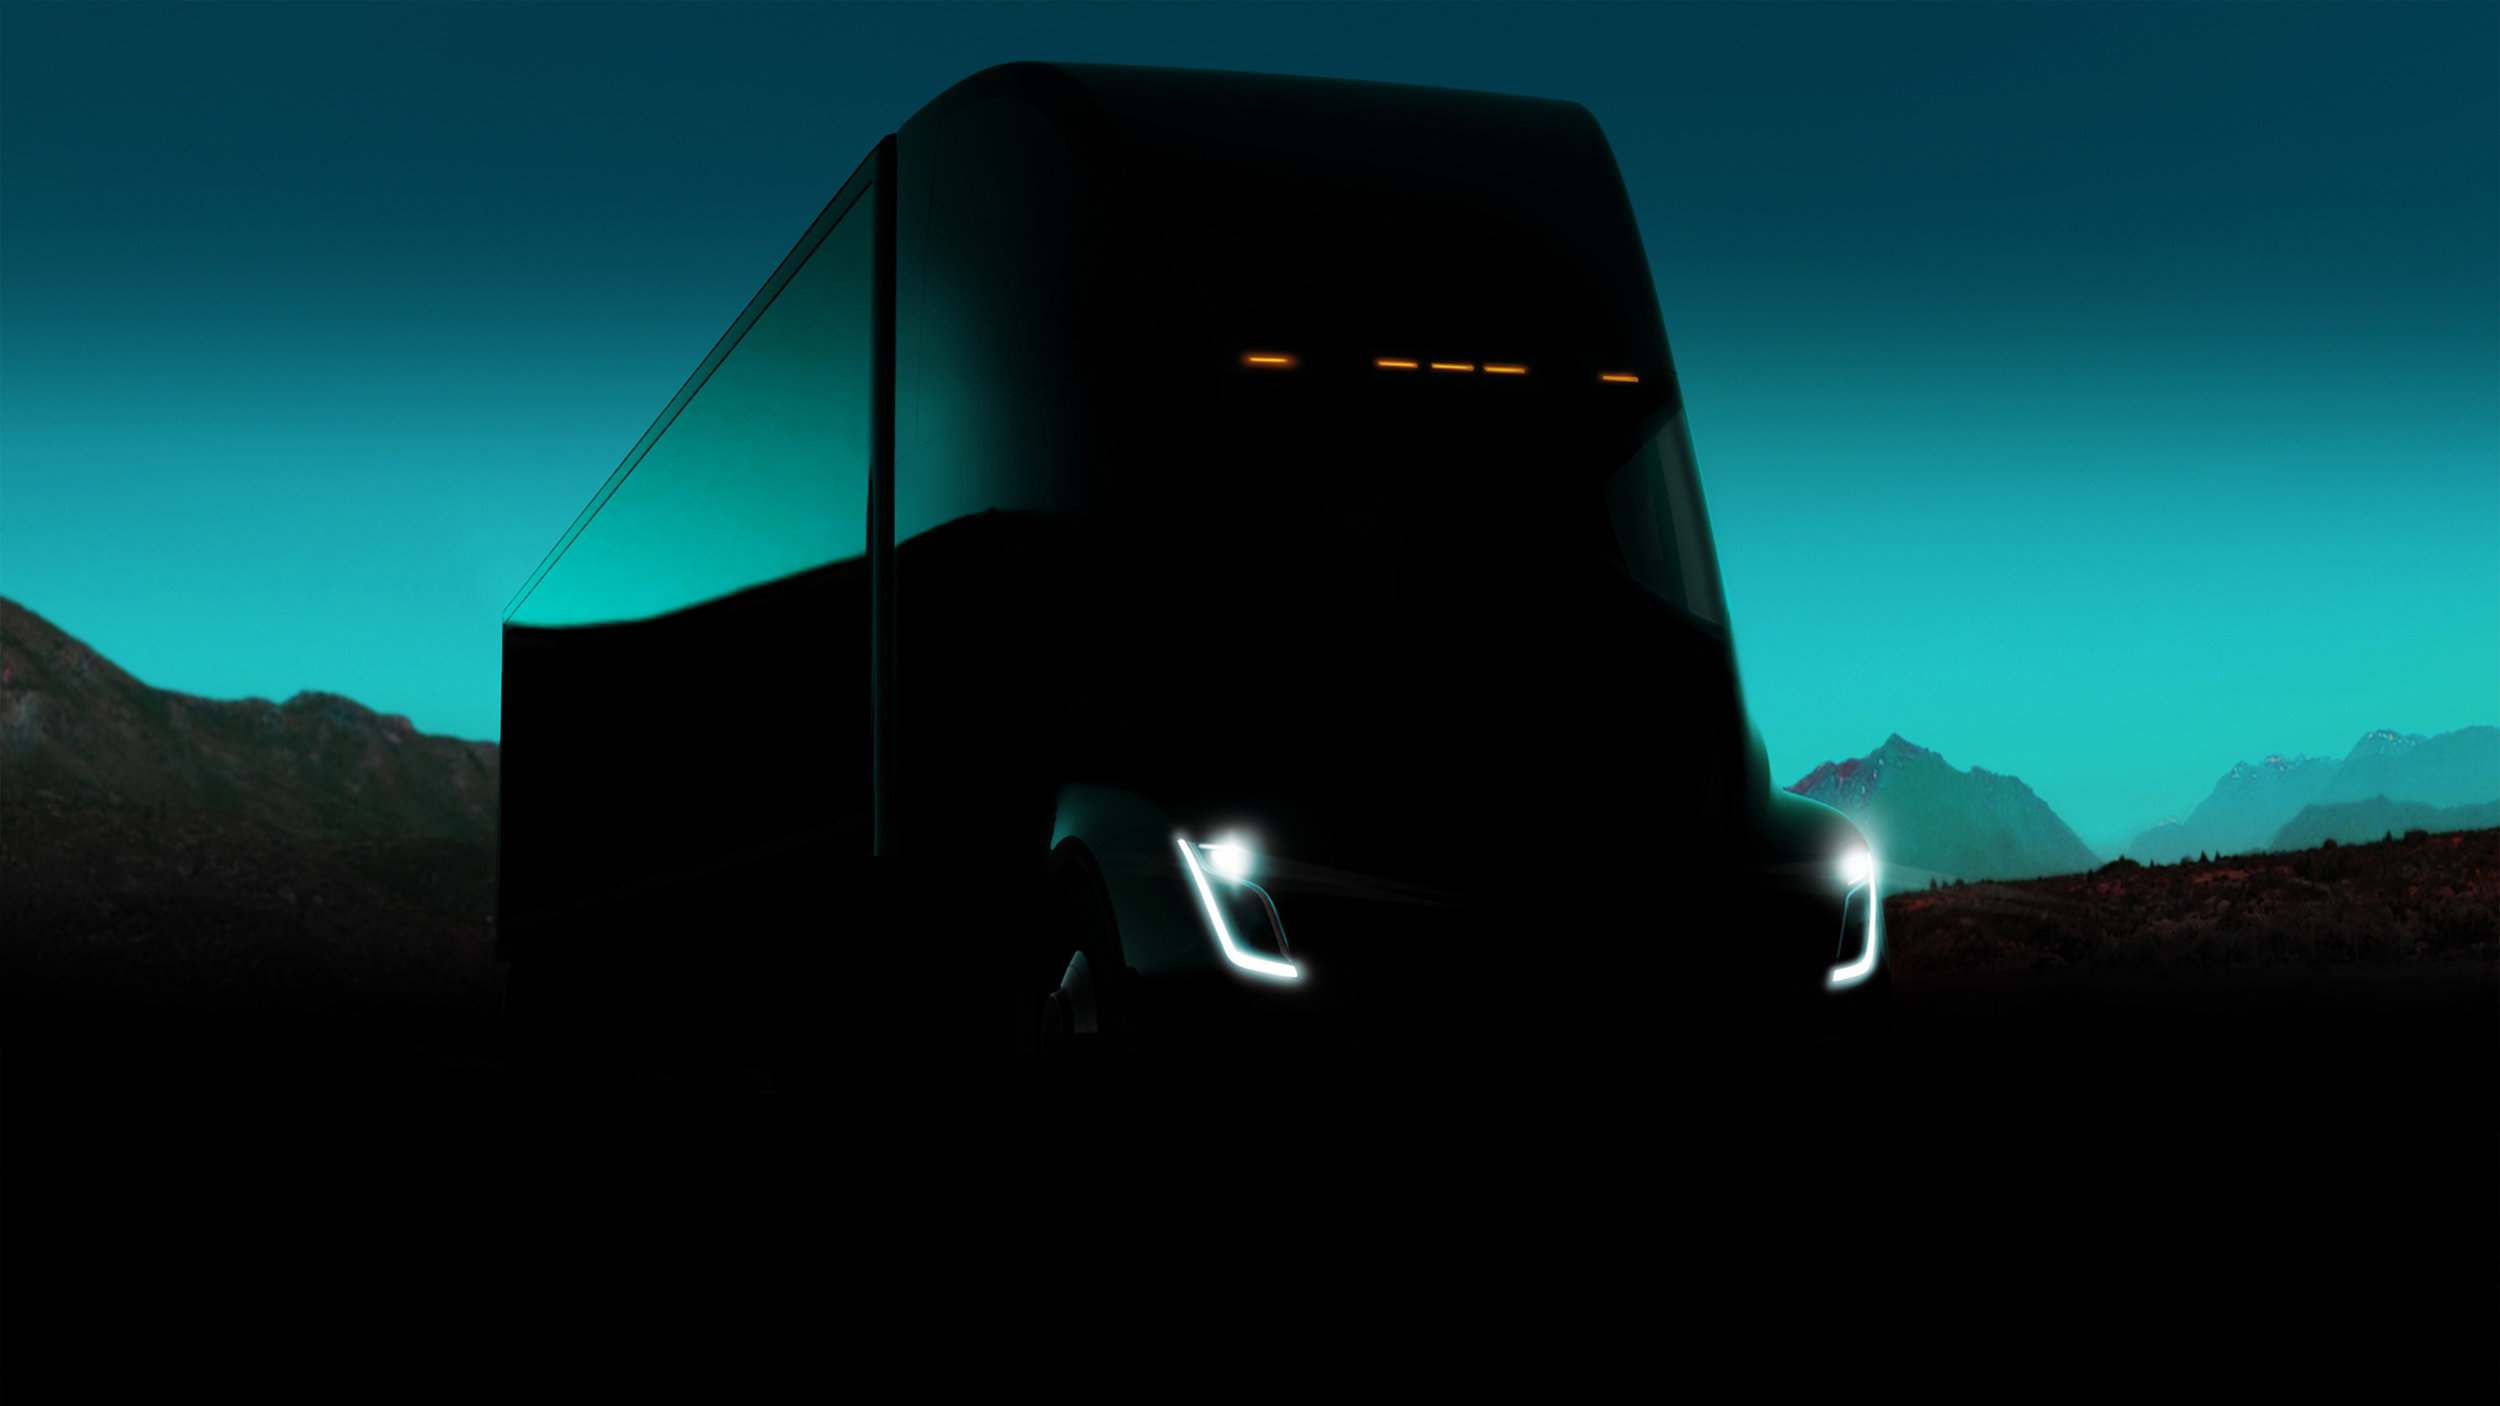 A dark background photograph of a Tesla Semi-Truck